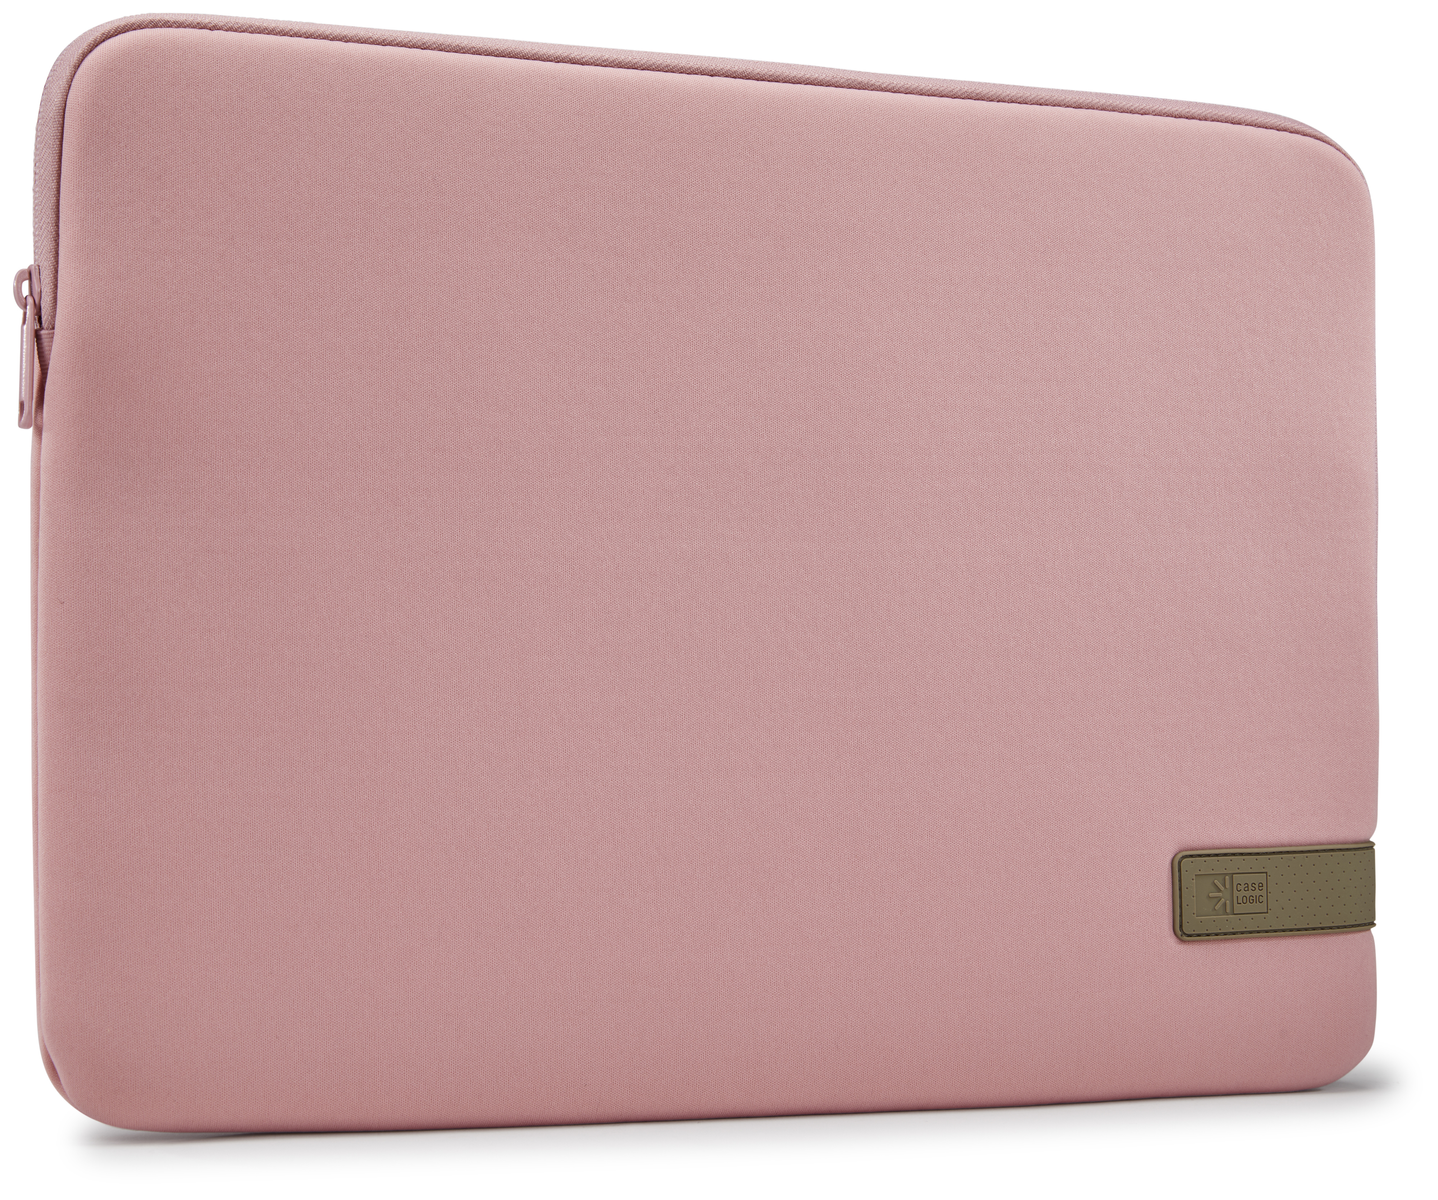 Reflect Notebook Universal CASE Sleeve Polyester, Zephyr Pink/Mermaid Sleeve LOGIC für